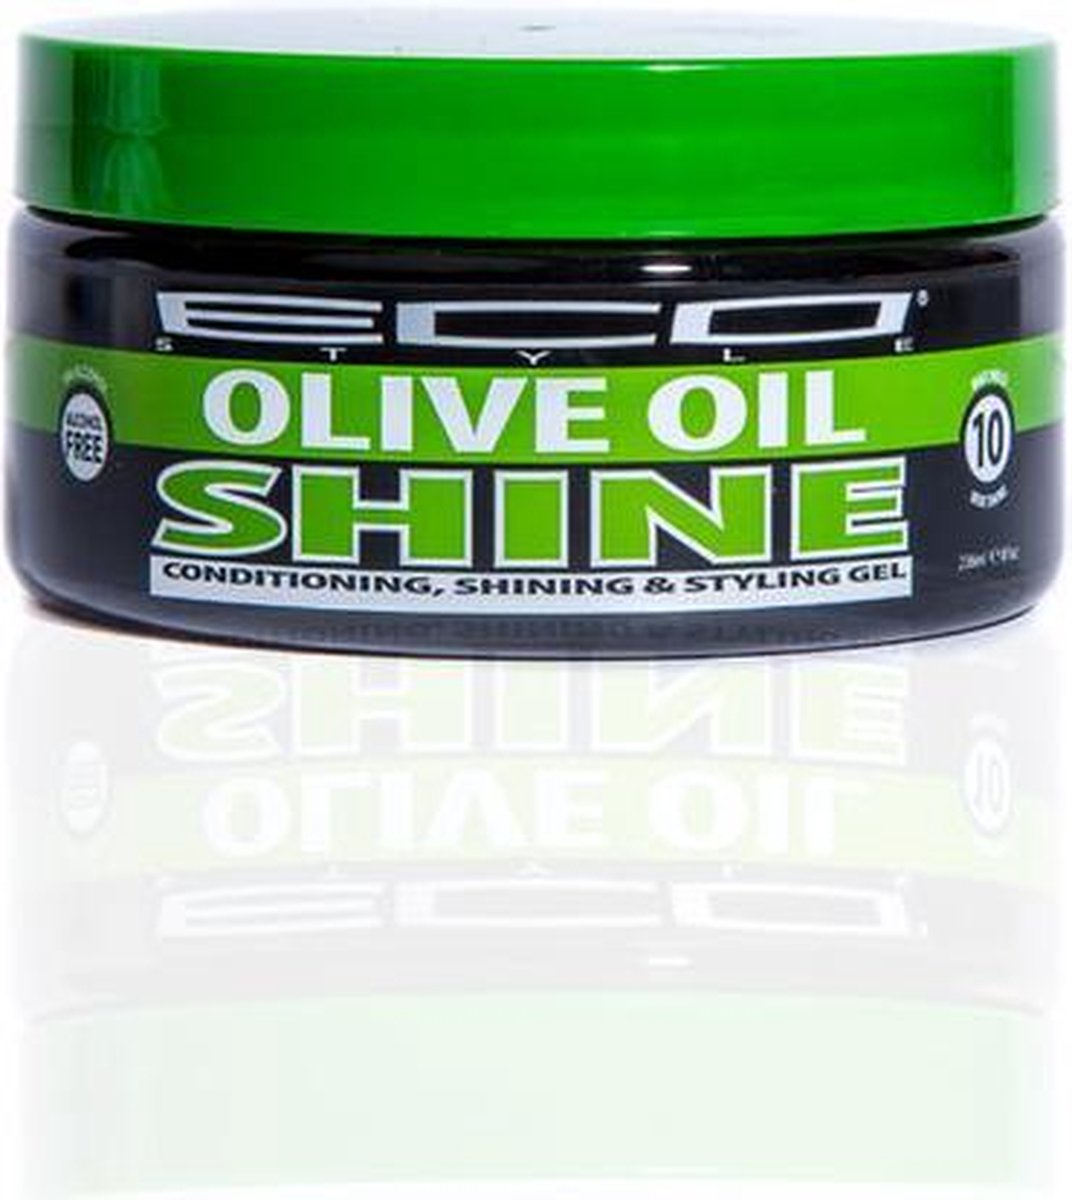 EcoStyler Shine Conditioning Shining Styling Gel Olive Oil 236ml